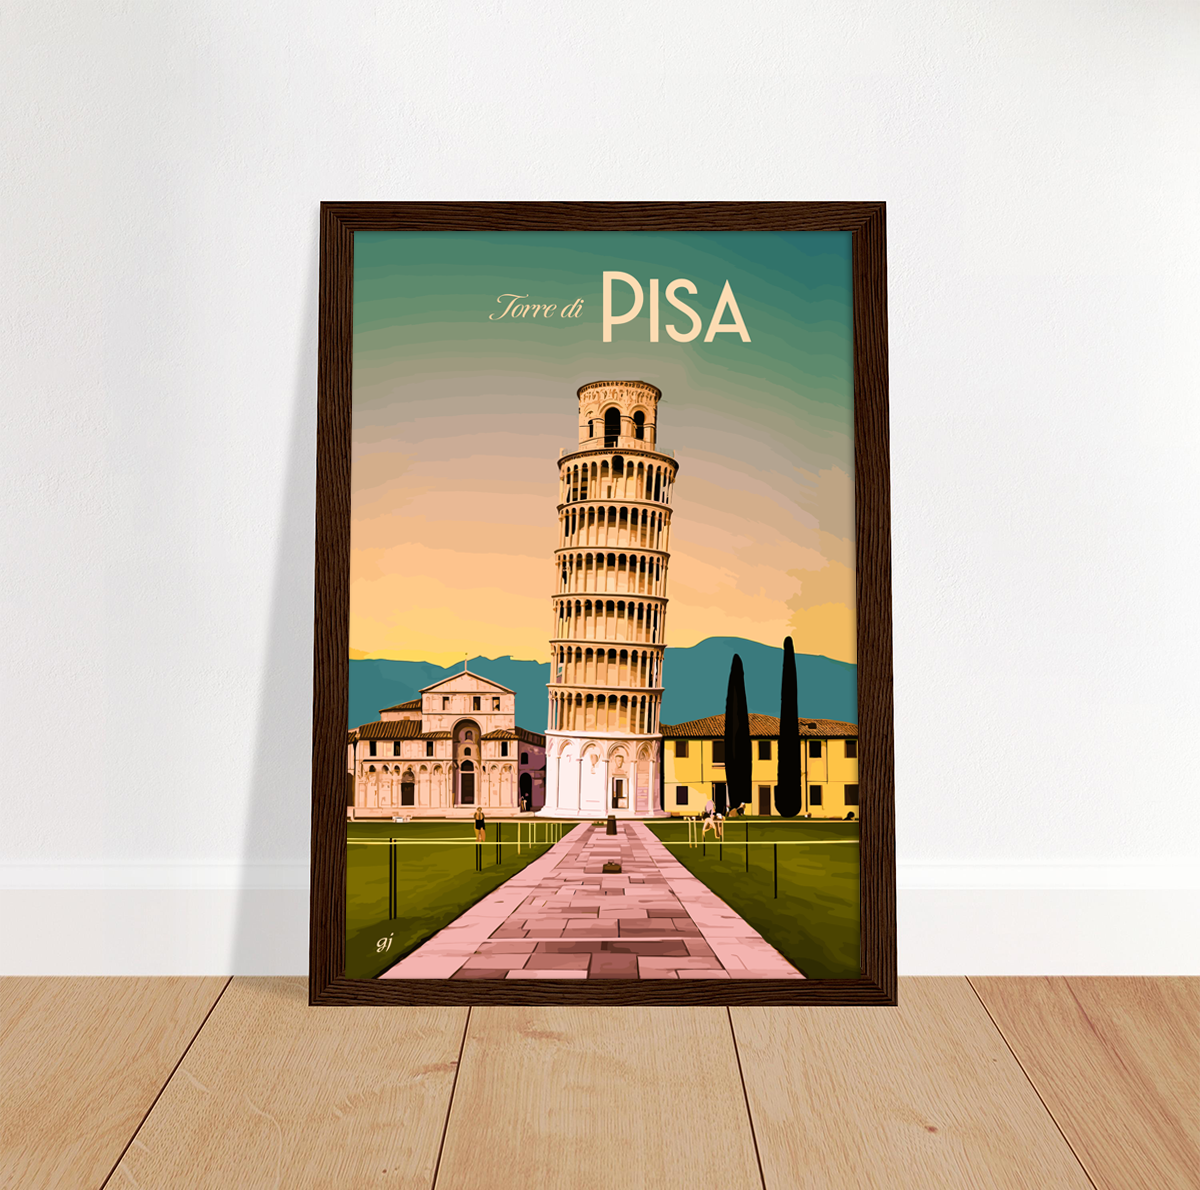 Pisa poster by bon voyage design